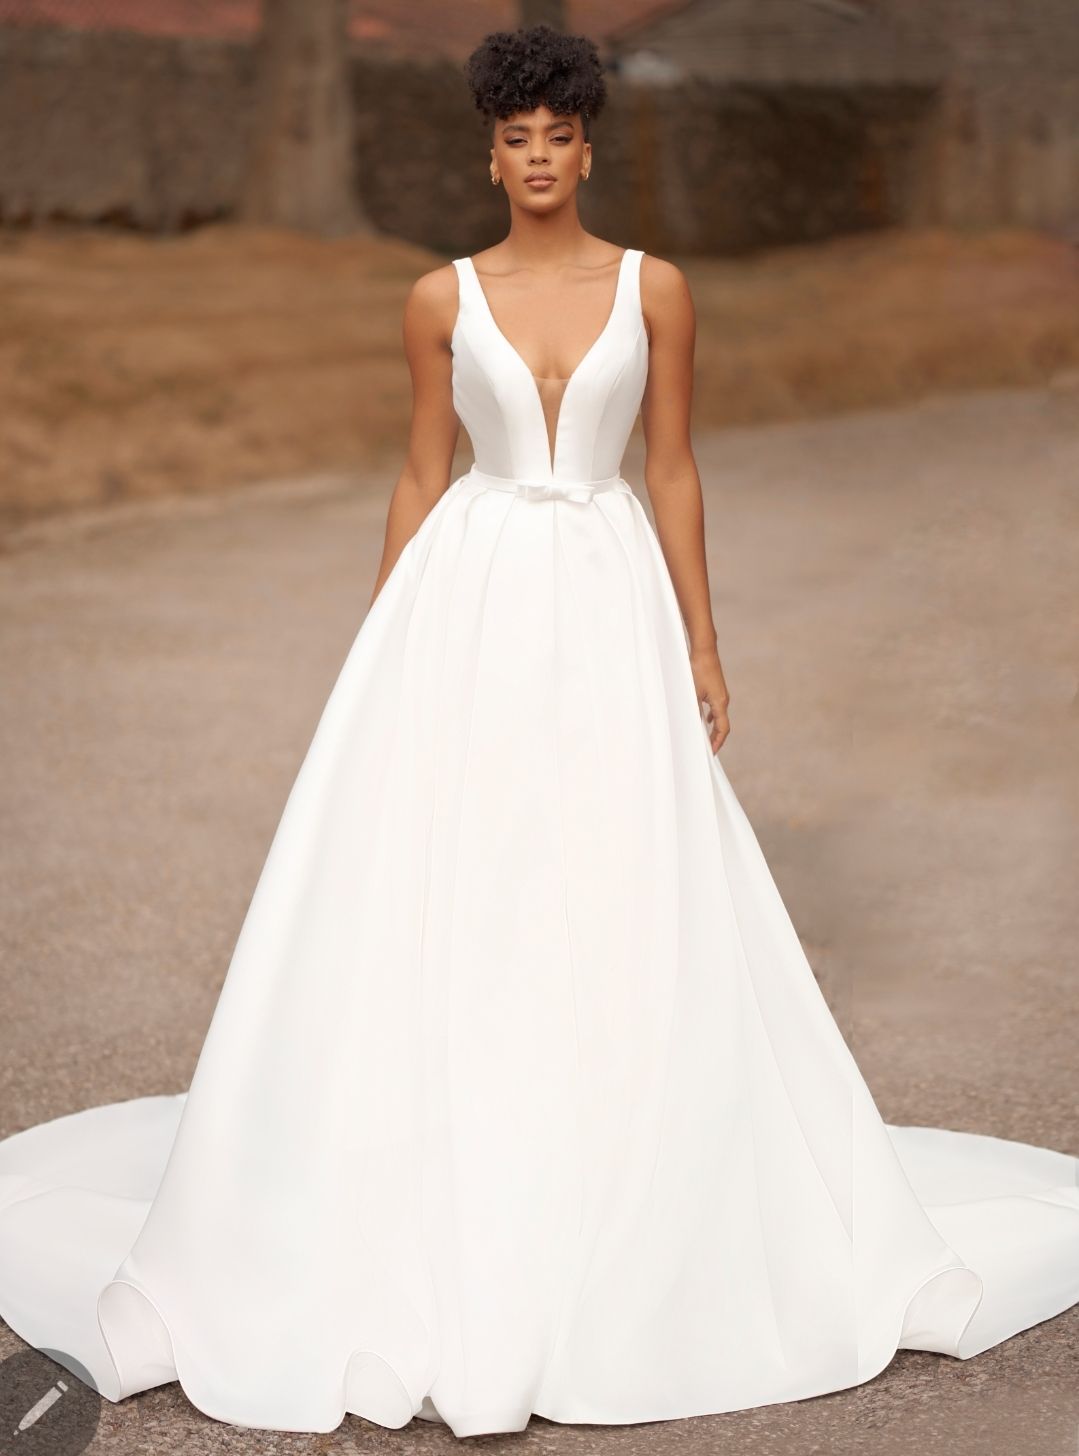 Best Dress 2 Impress Bridal-Image-22